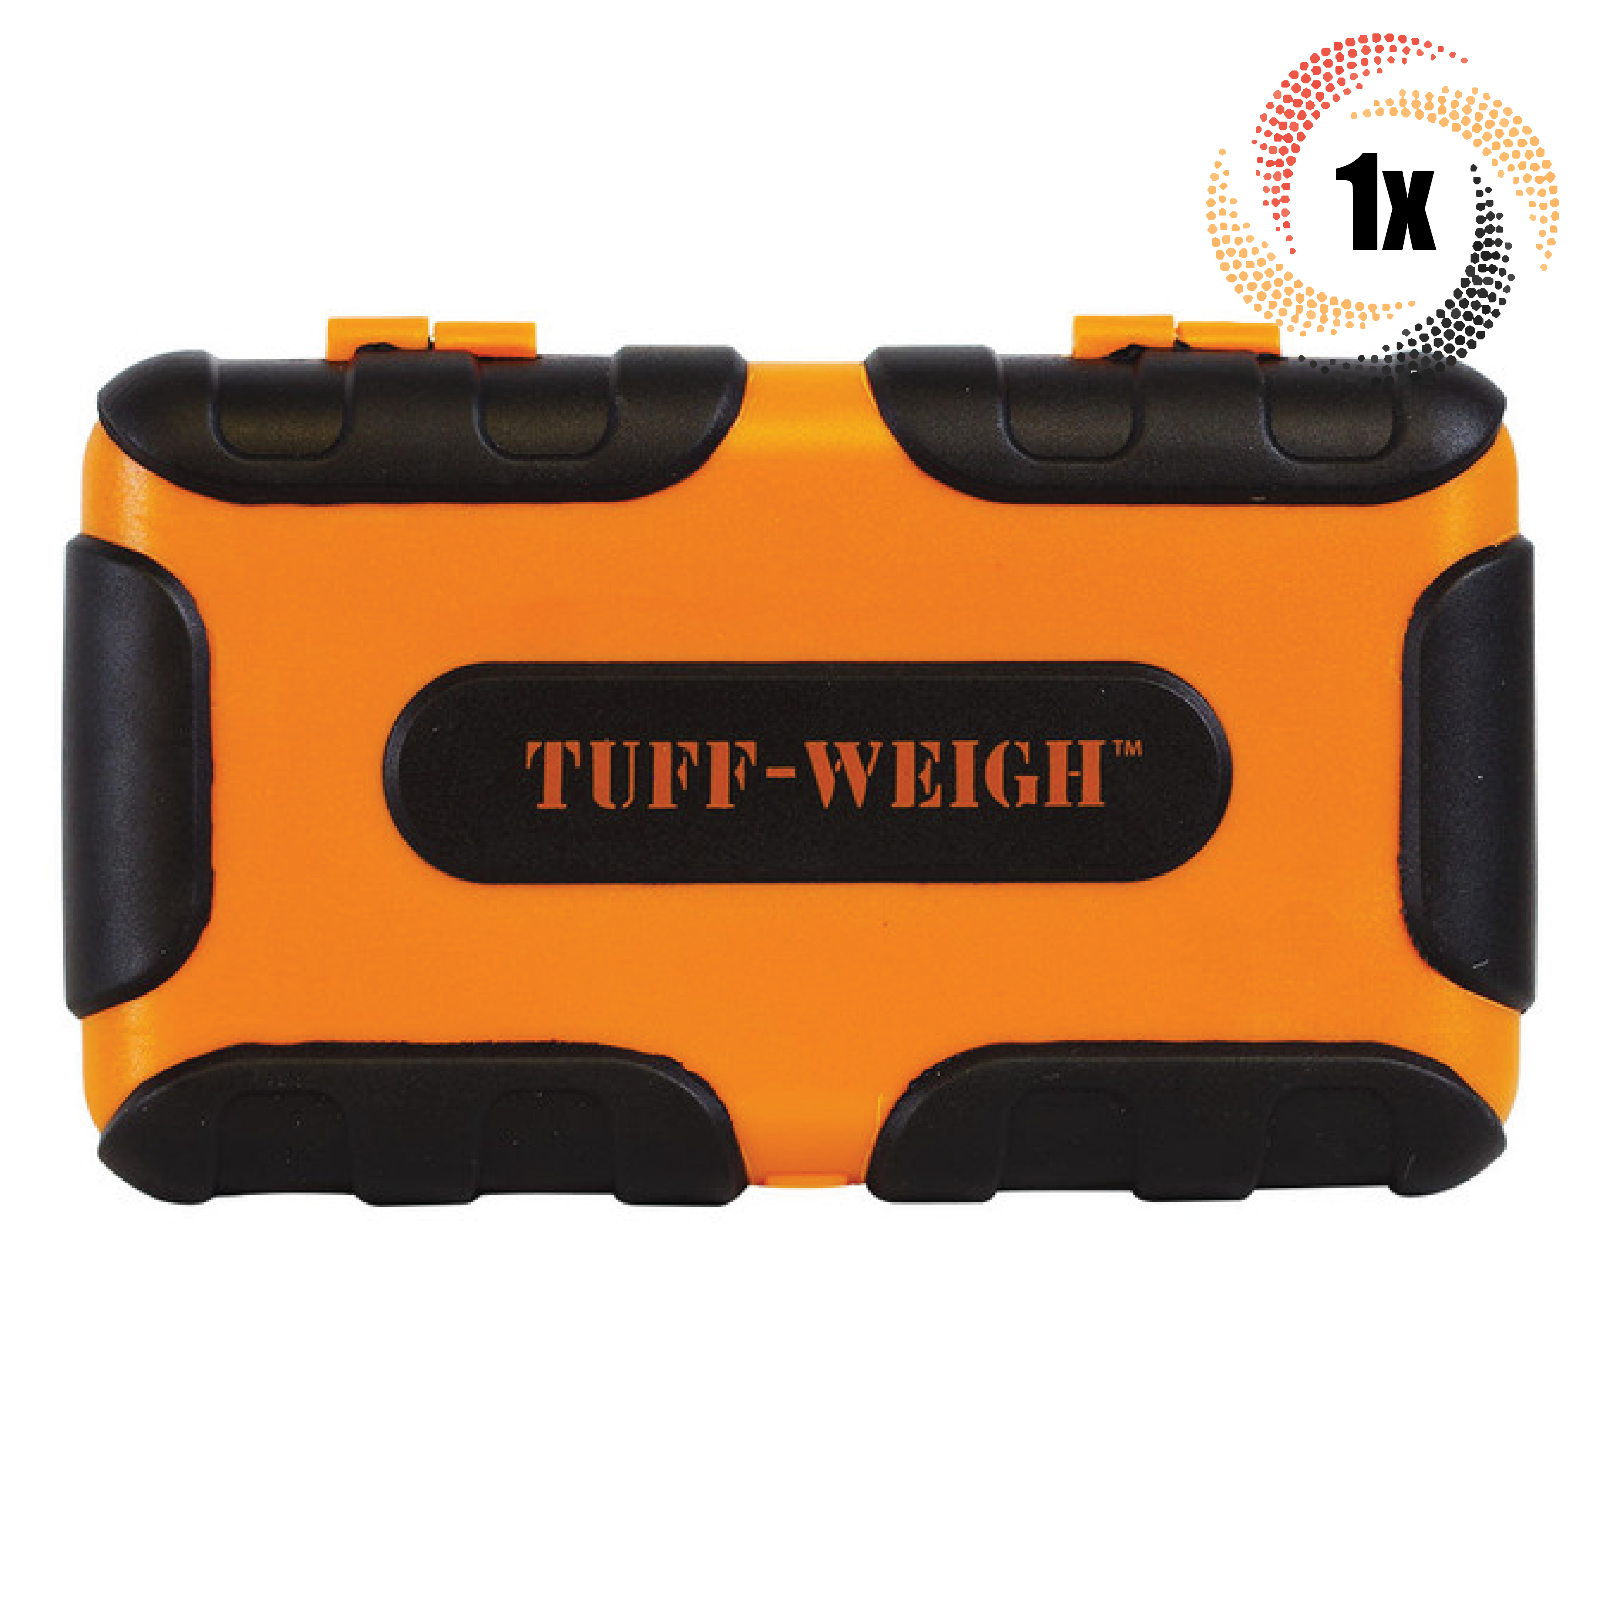 Primary image for 1x Scale Truweigh Orange Tuff-Weigh Digital Mini Scale | Auto Shutoff | 1000G